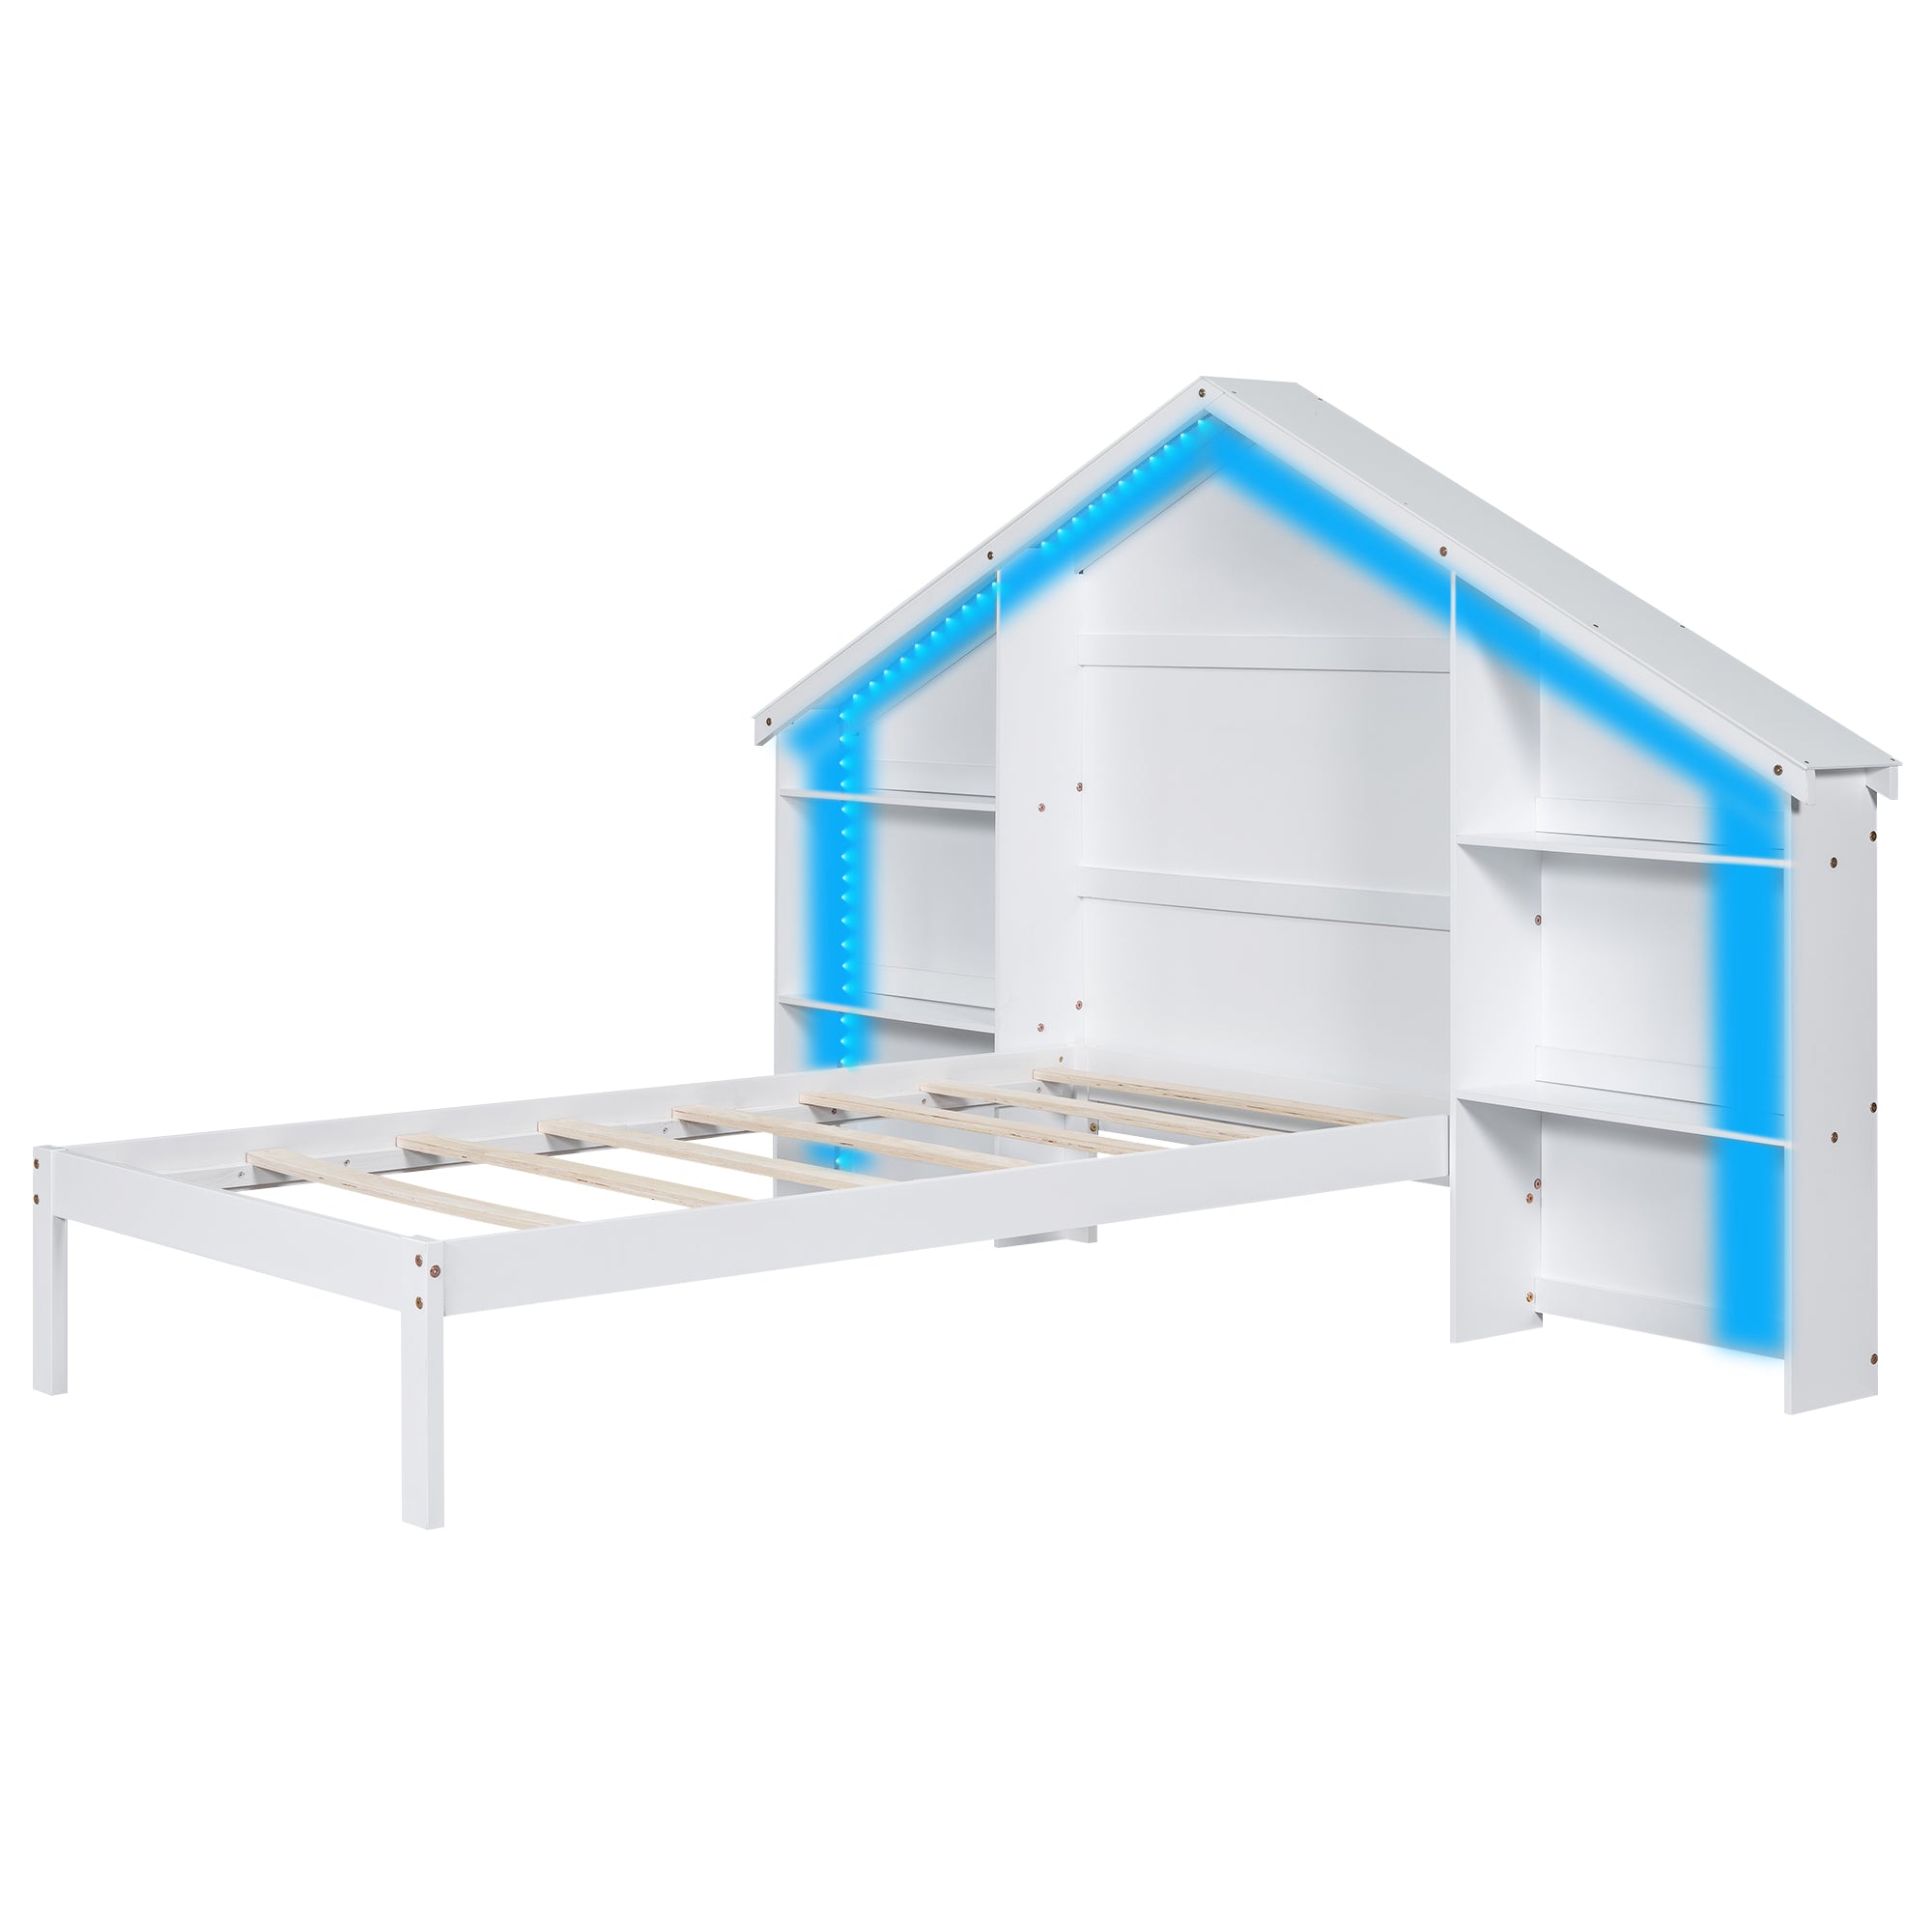 Bellemave® Wood Platform Bed with House-shaped Storage Headboard and Built-in LED Bellemave®